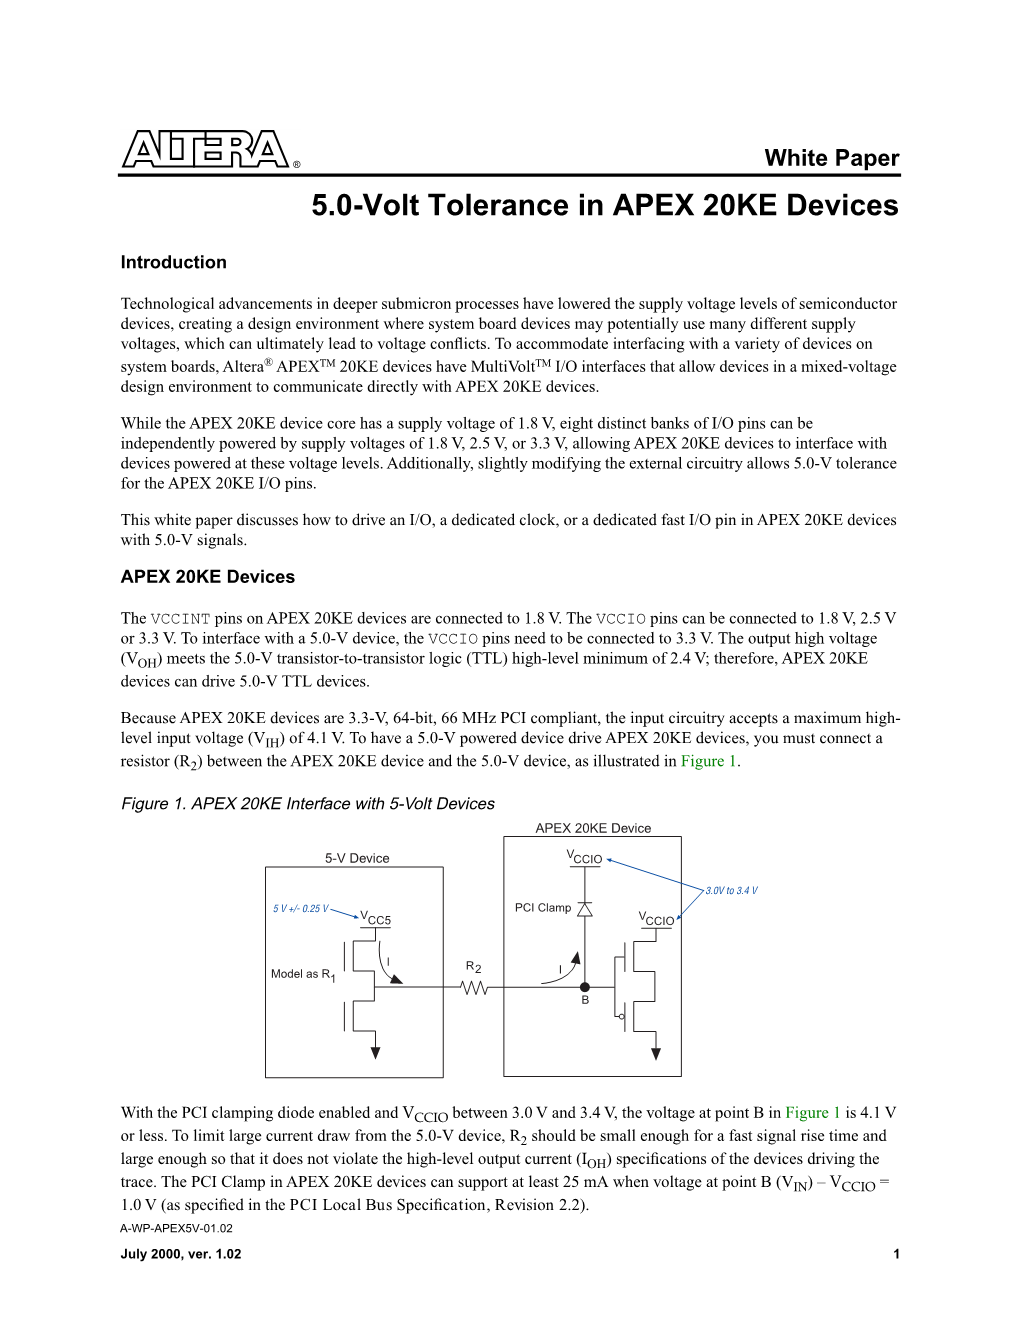 5.0-Volt Tolerance in APEX 20KE Devices White Paper